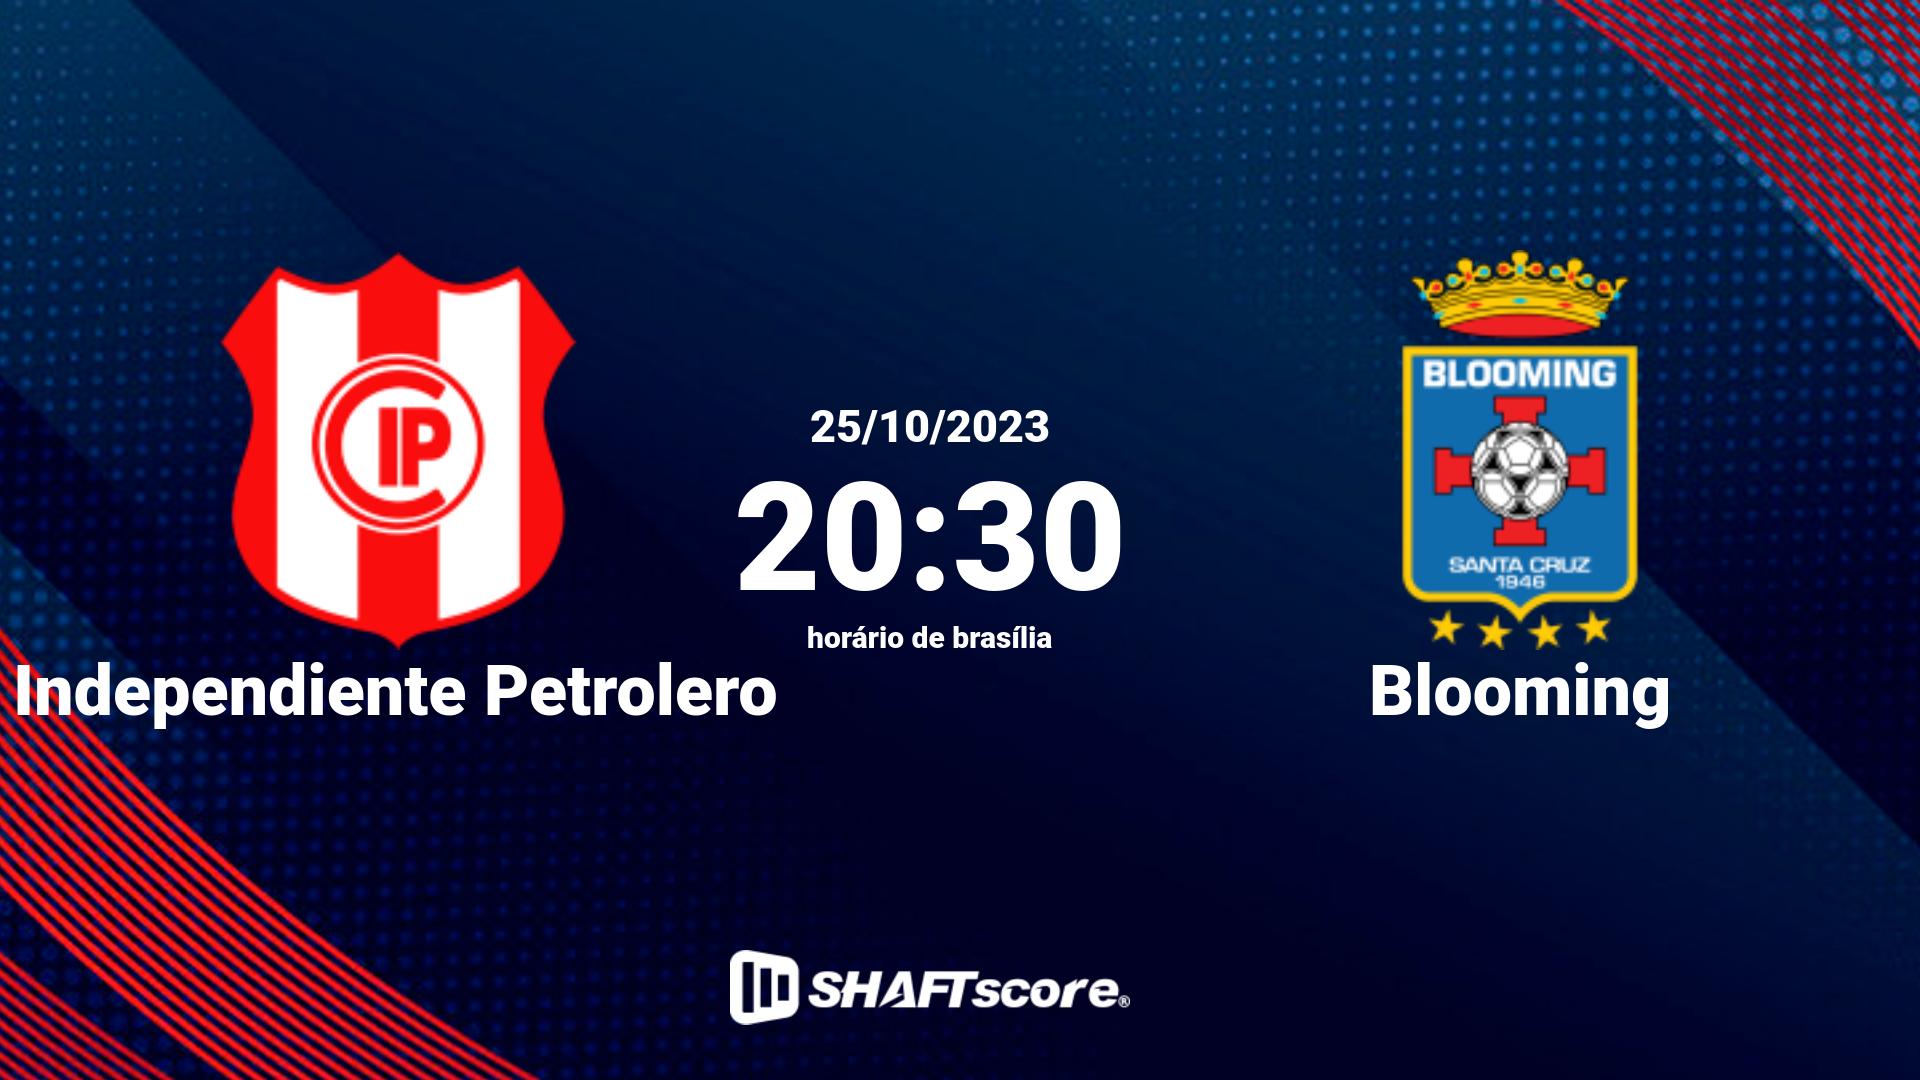 Estatísticas do jogo Independiente Petrolero vs Blooming 25.10 20:30